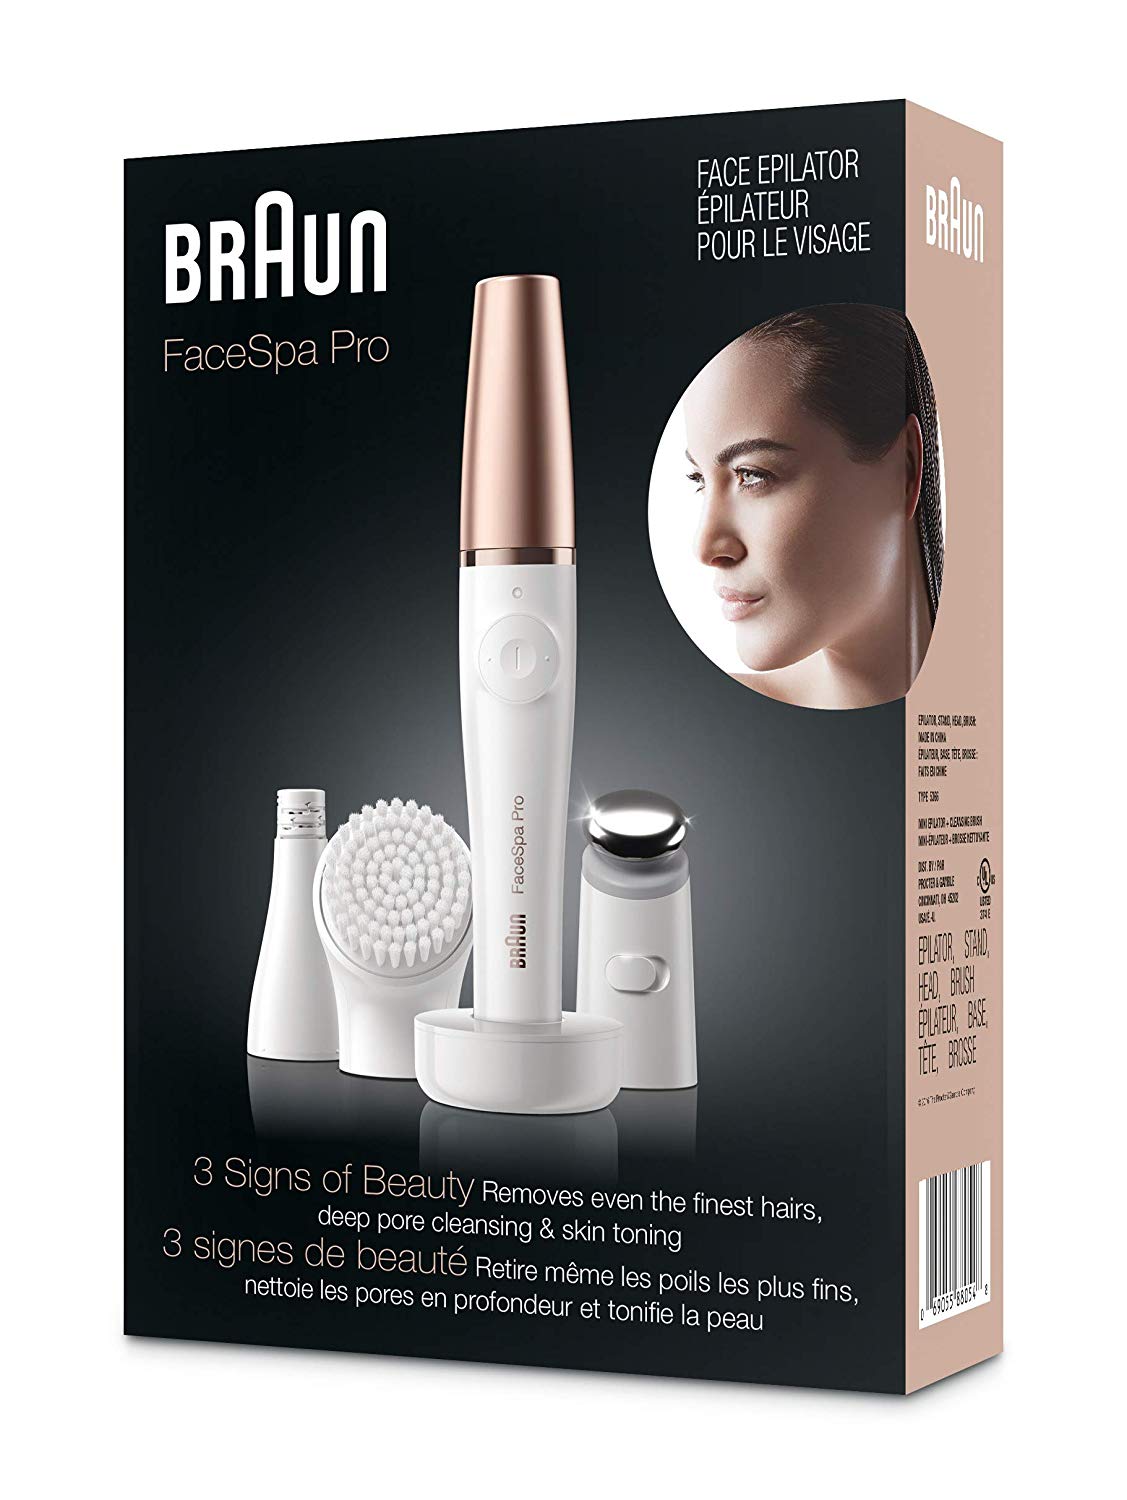 Braun FaceSpa Pro 911 Face Epilator 3-in-1 Facial System